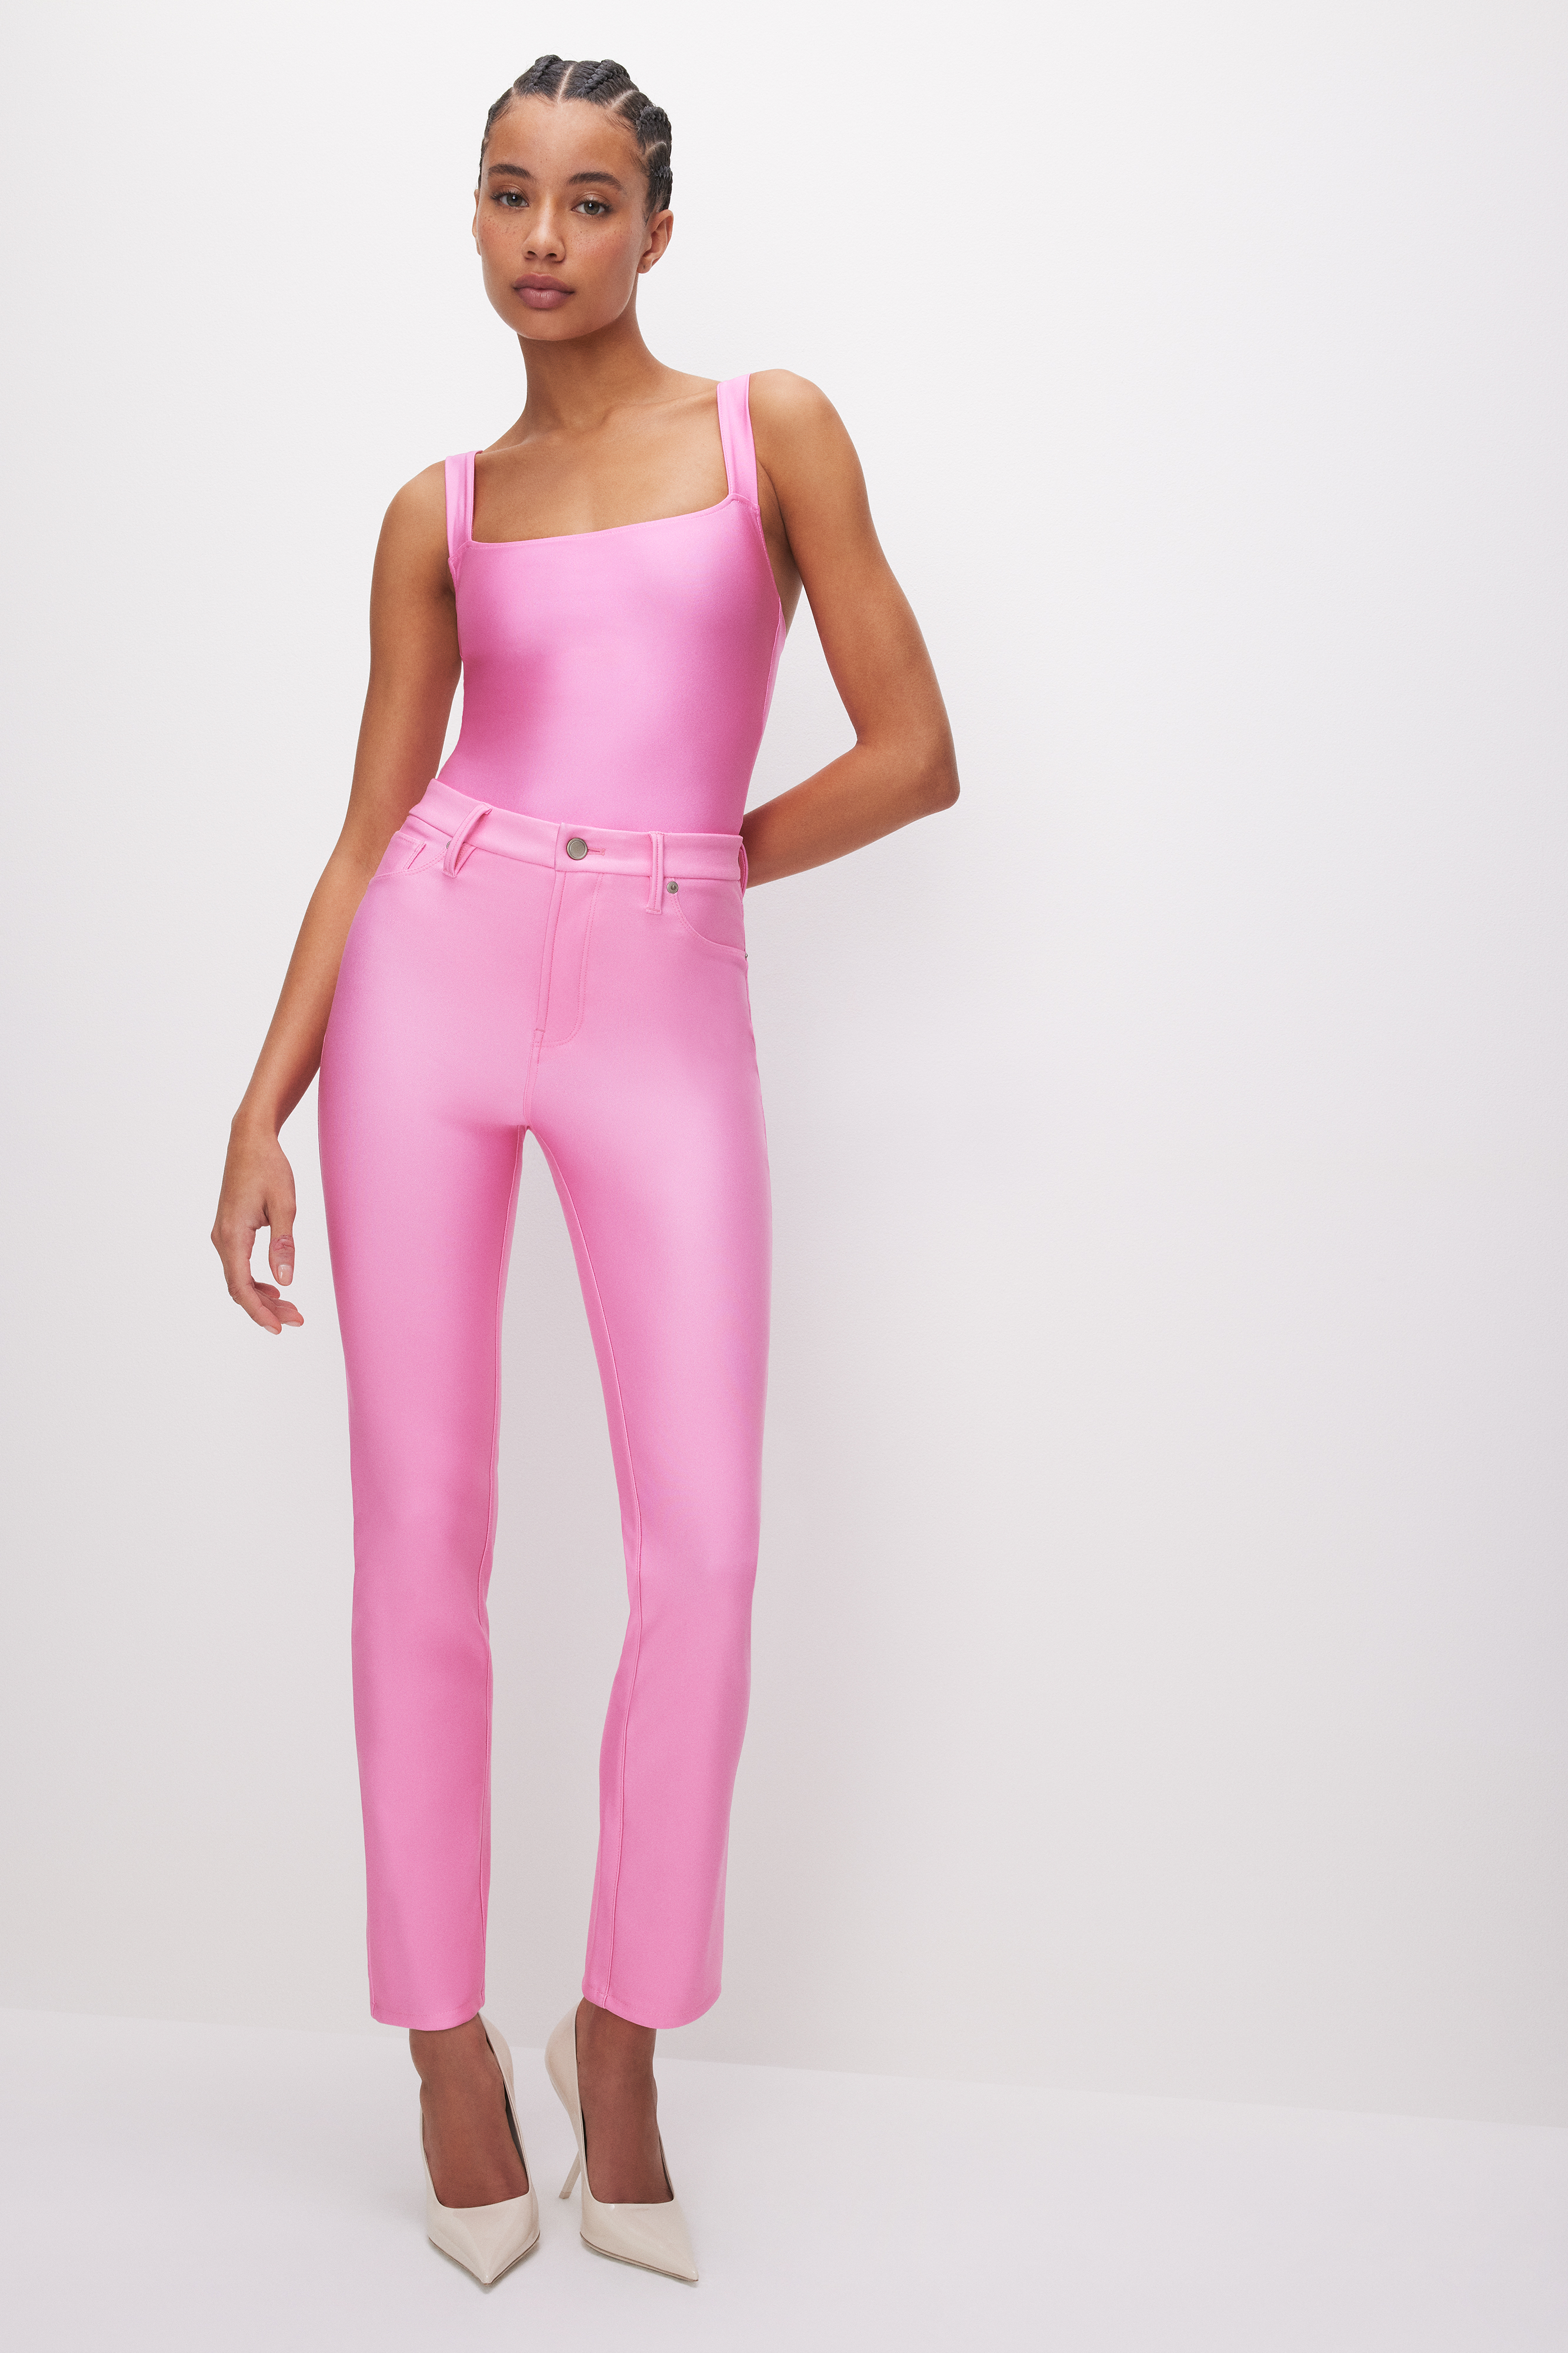 That pink bodysuit with some blue jeans🔥#shapewear #kmartfinds #kmart